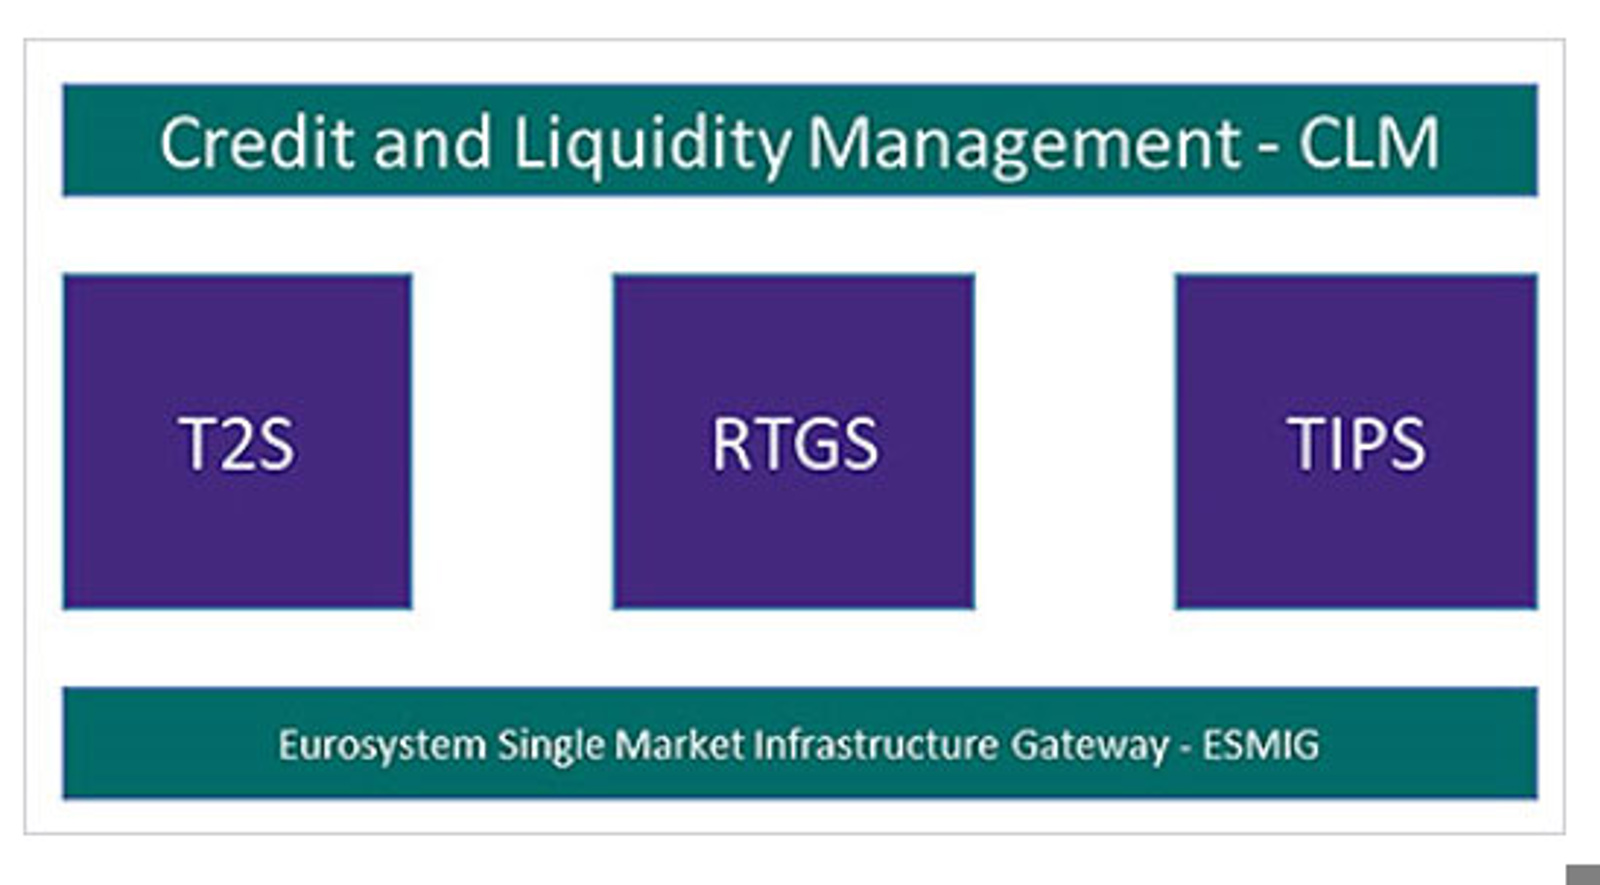 Credit and Liquidity Management - CLM